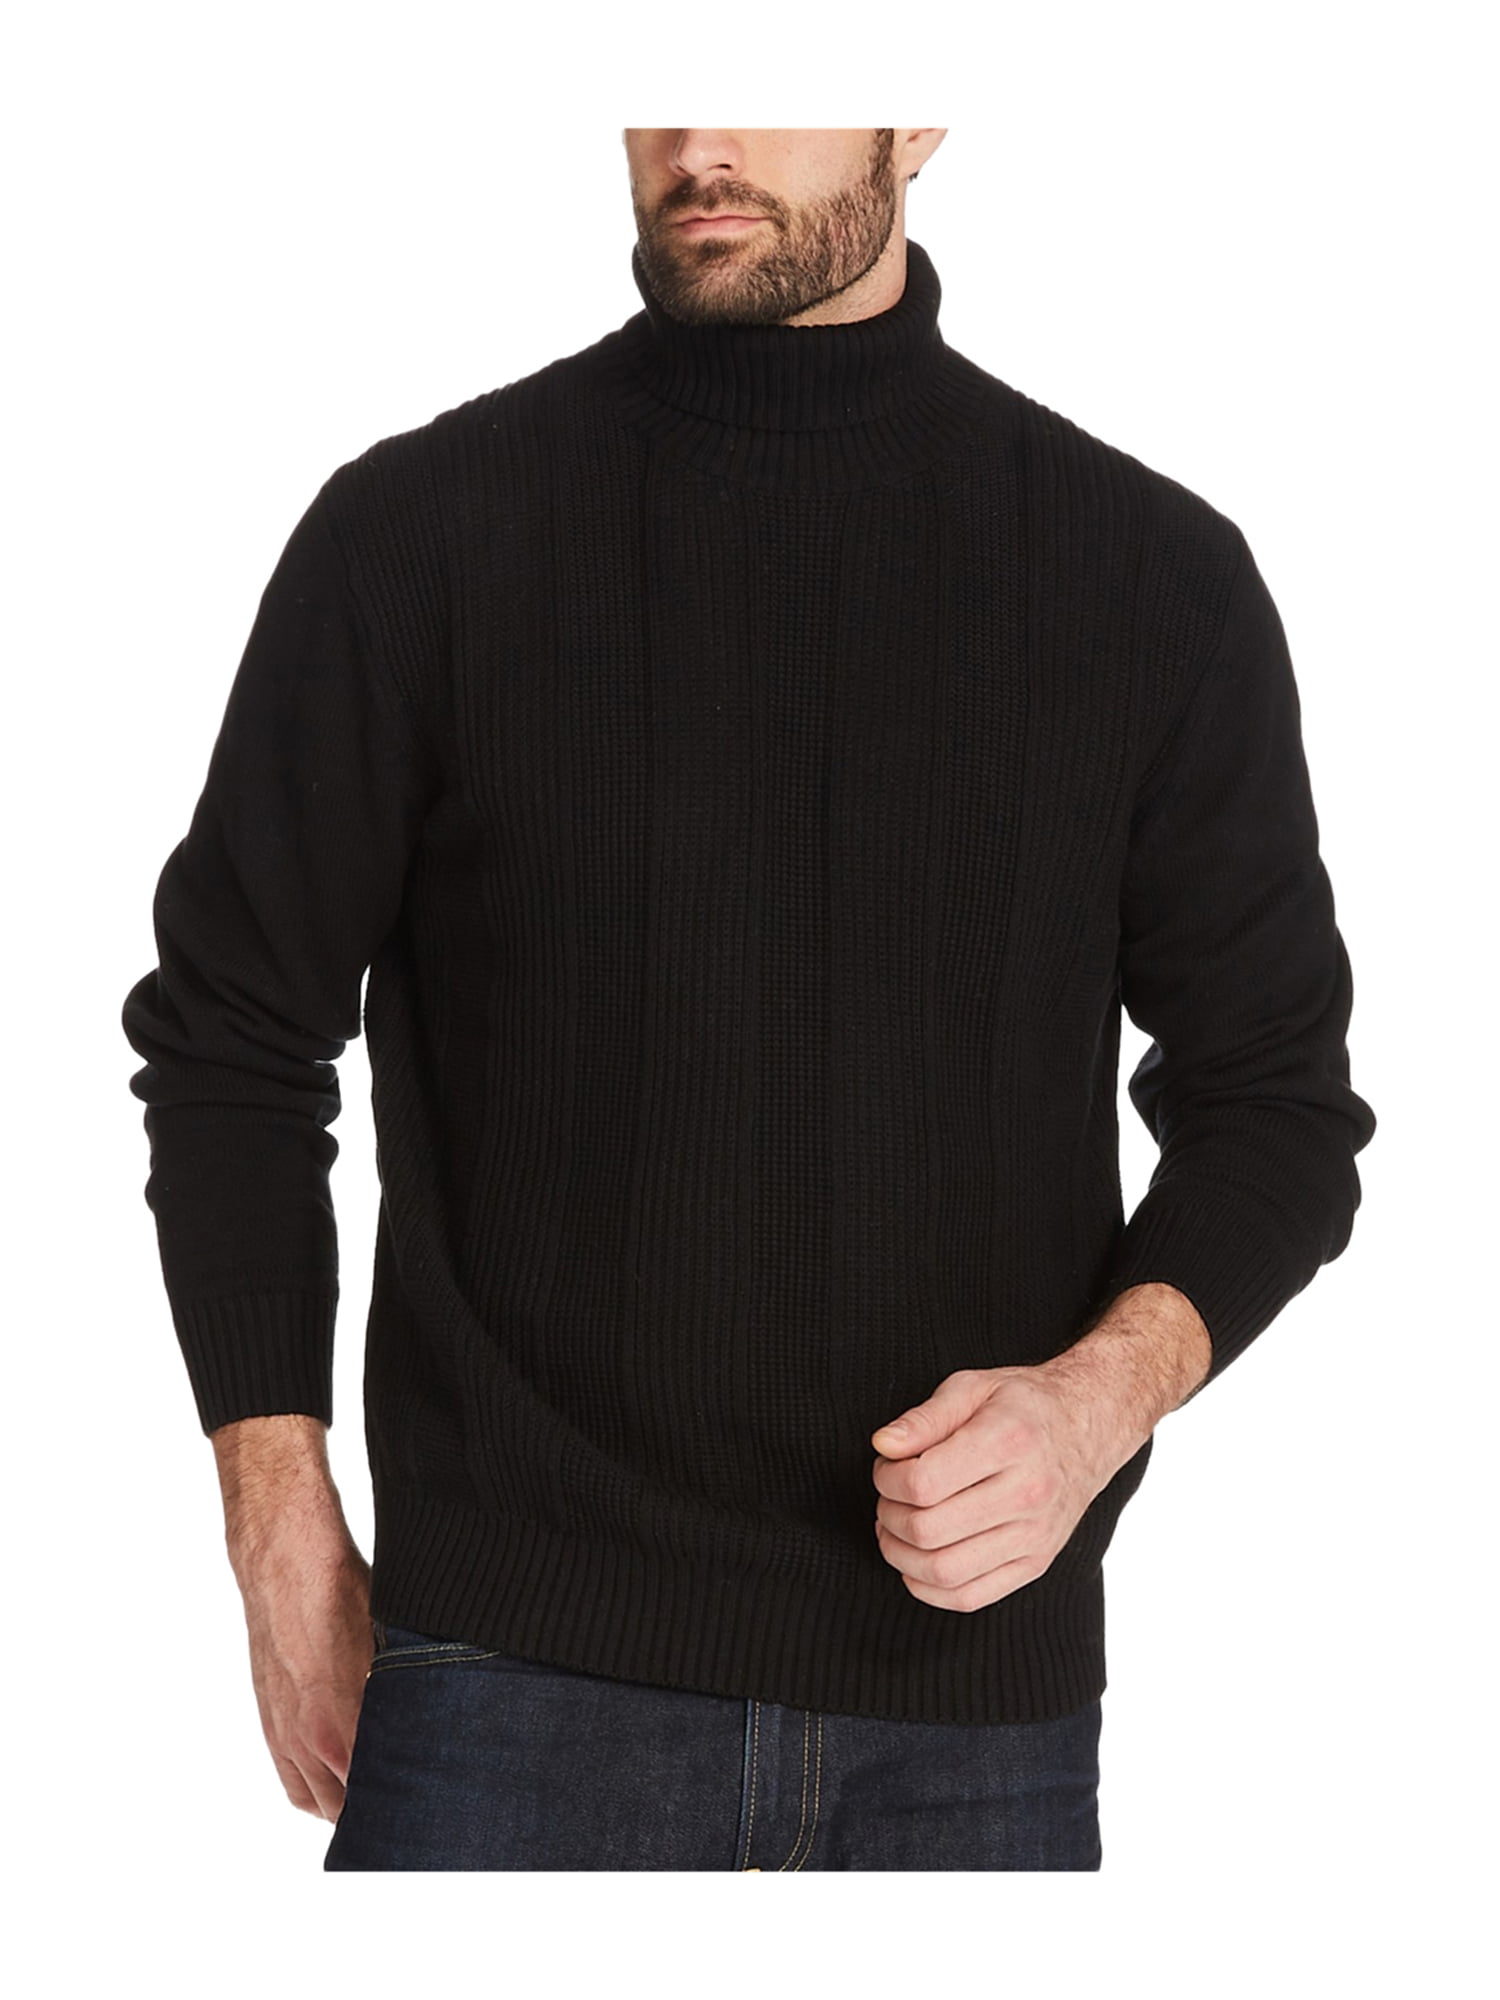 Weatherproof Mens Turtleneck Knit Sweater black L | Walmart Canada